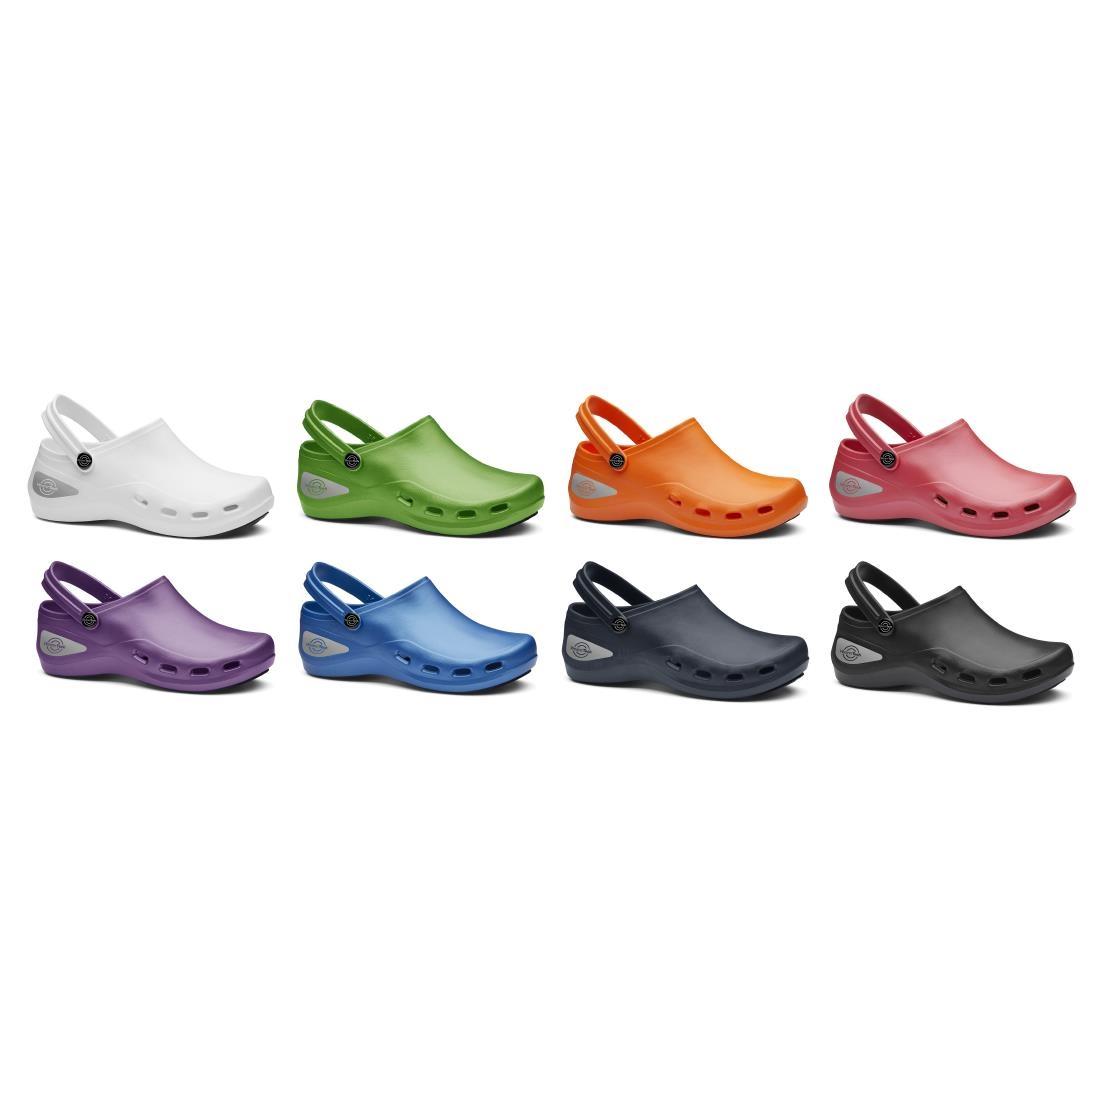 WearerTech Unisex Invigorate White Safety Shoe Size 8 - BB199-42  - 7